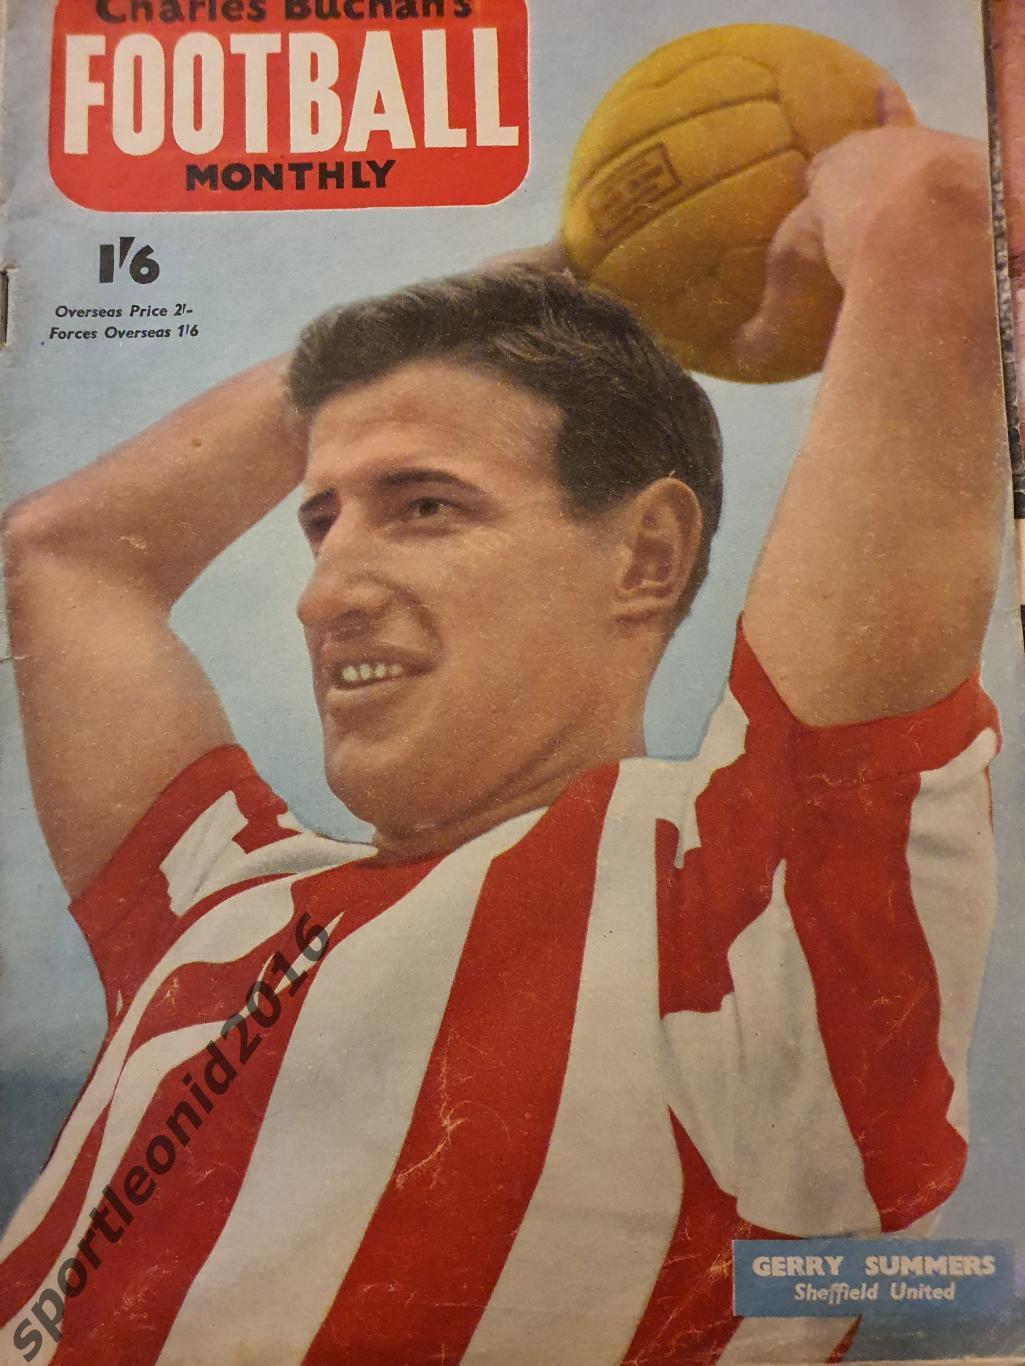 Football Monthly Charles Buchans's 1958 4 выпуска. 2